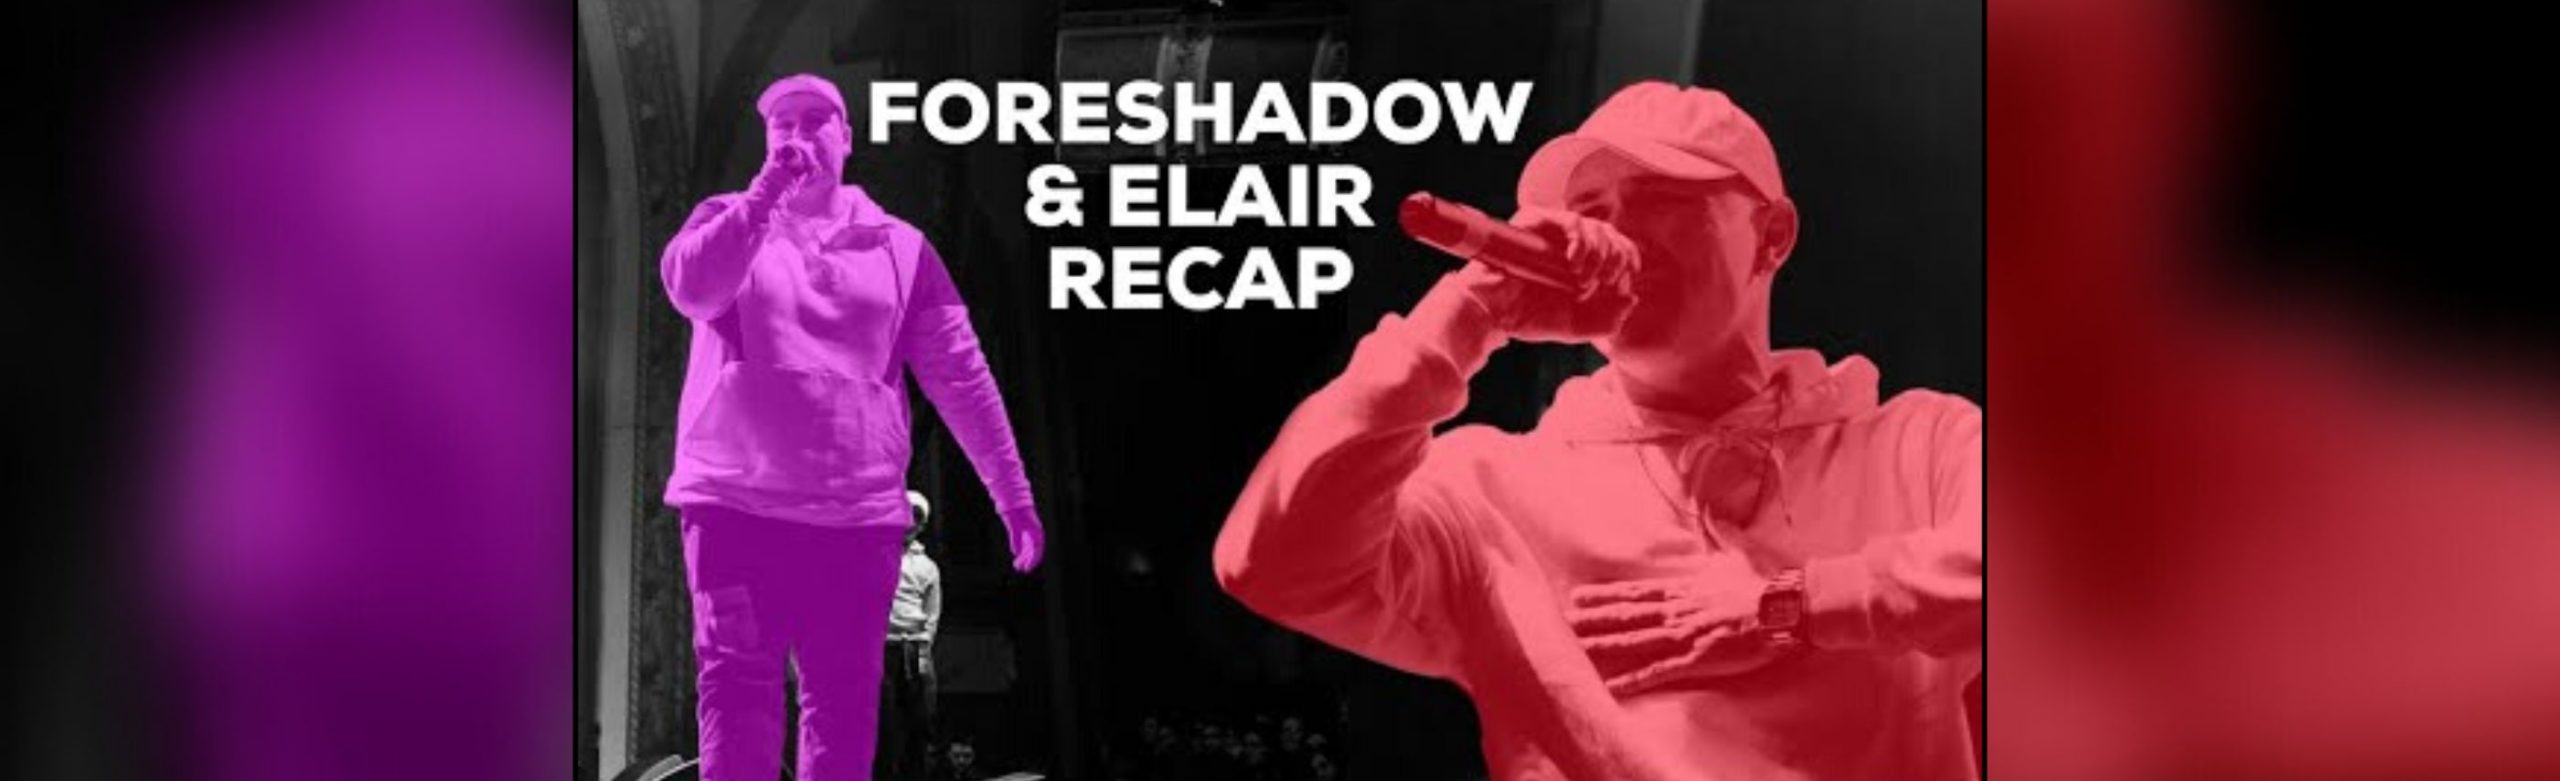 WATCH: Foreshadow x Elair Share Bone Thugs N Harmony Recap Video Image